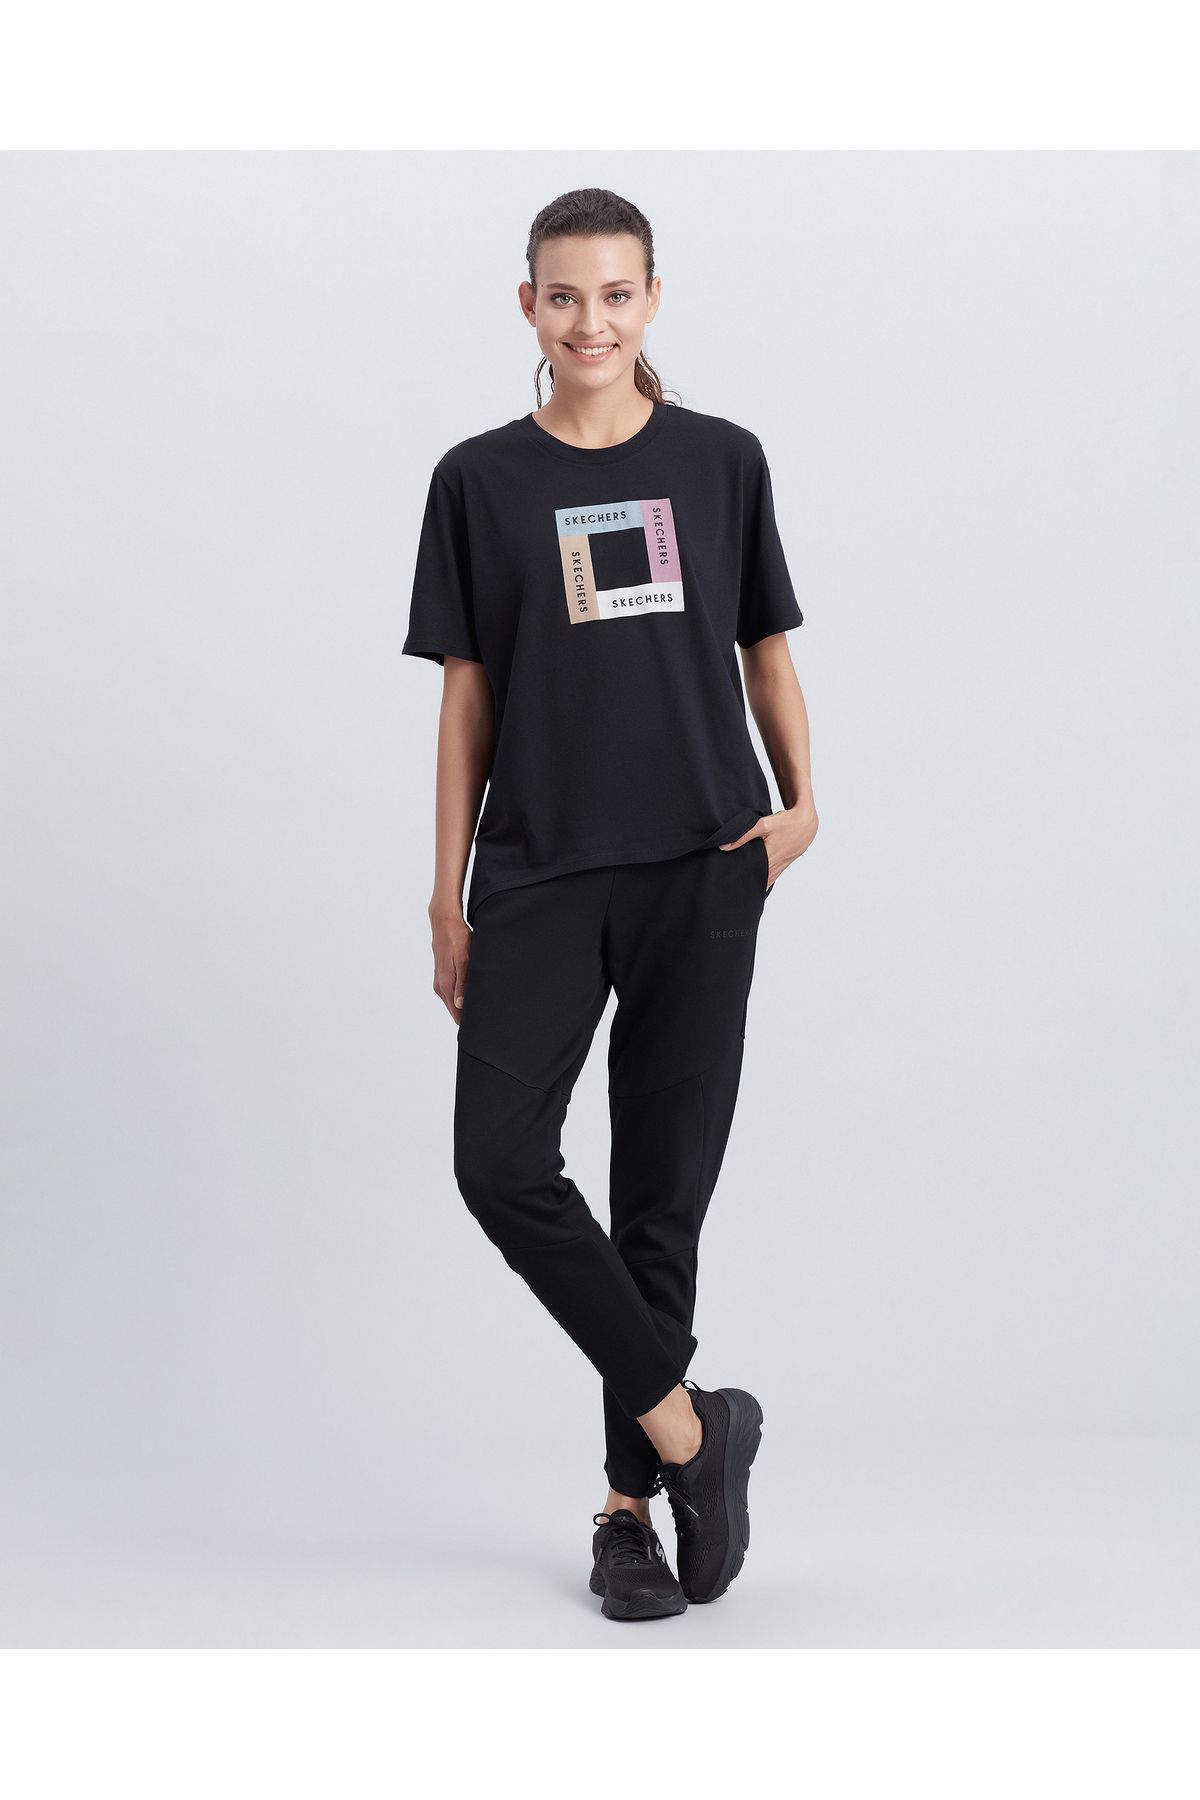 Skechers W Asymmetric T-shirt Kadın Siyah Tshirt S212932-001